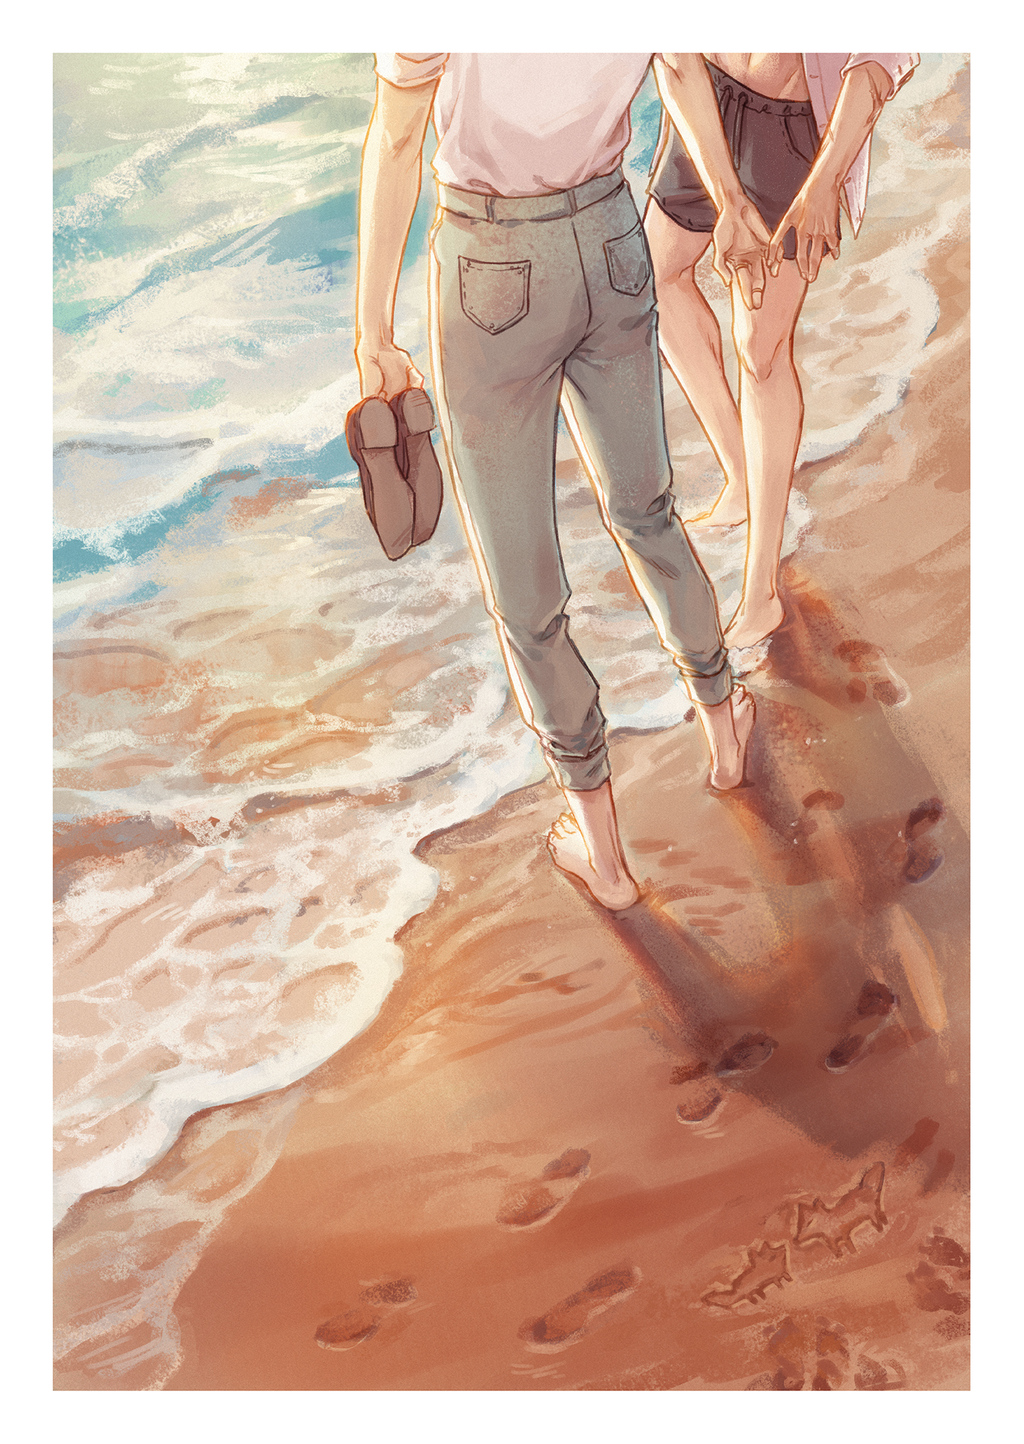 After The Storm Beach | Print - Aurigae Art &Illustration